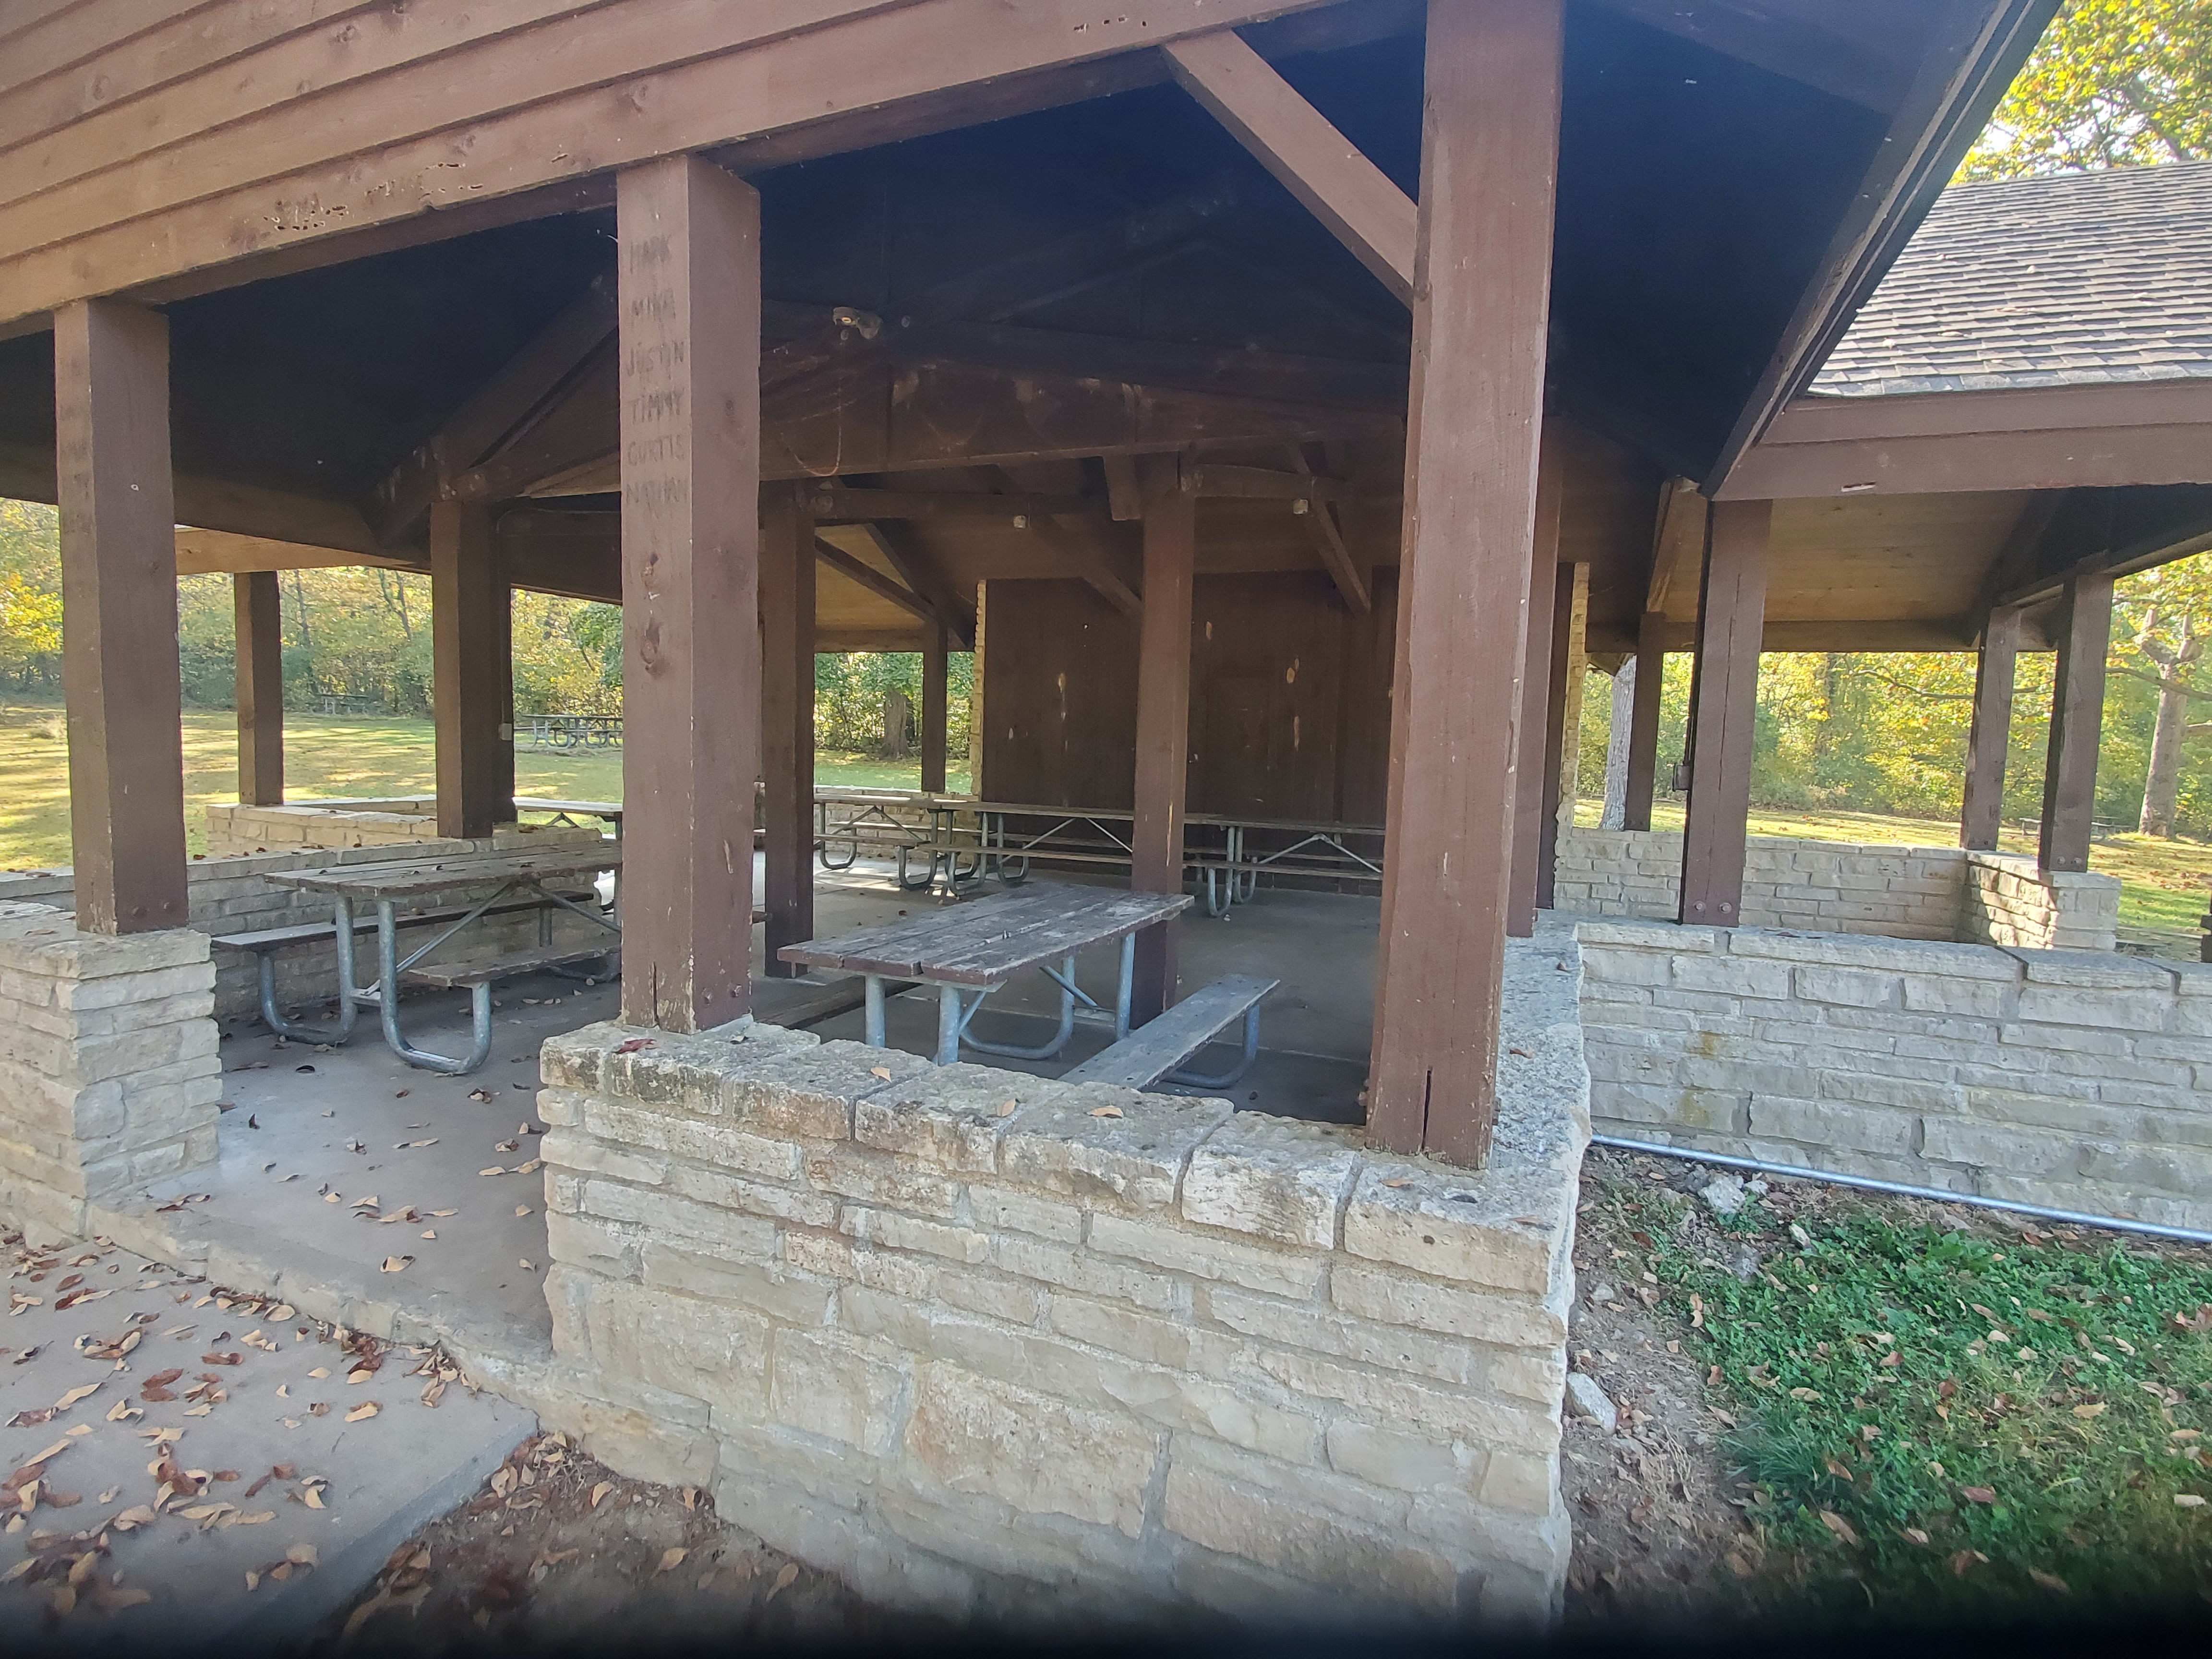 Picnic tables inside the wood-framed open shelter